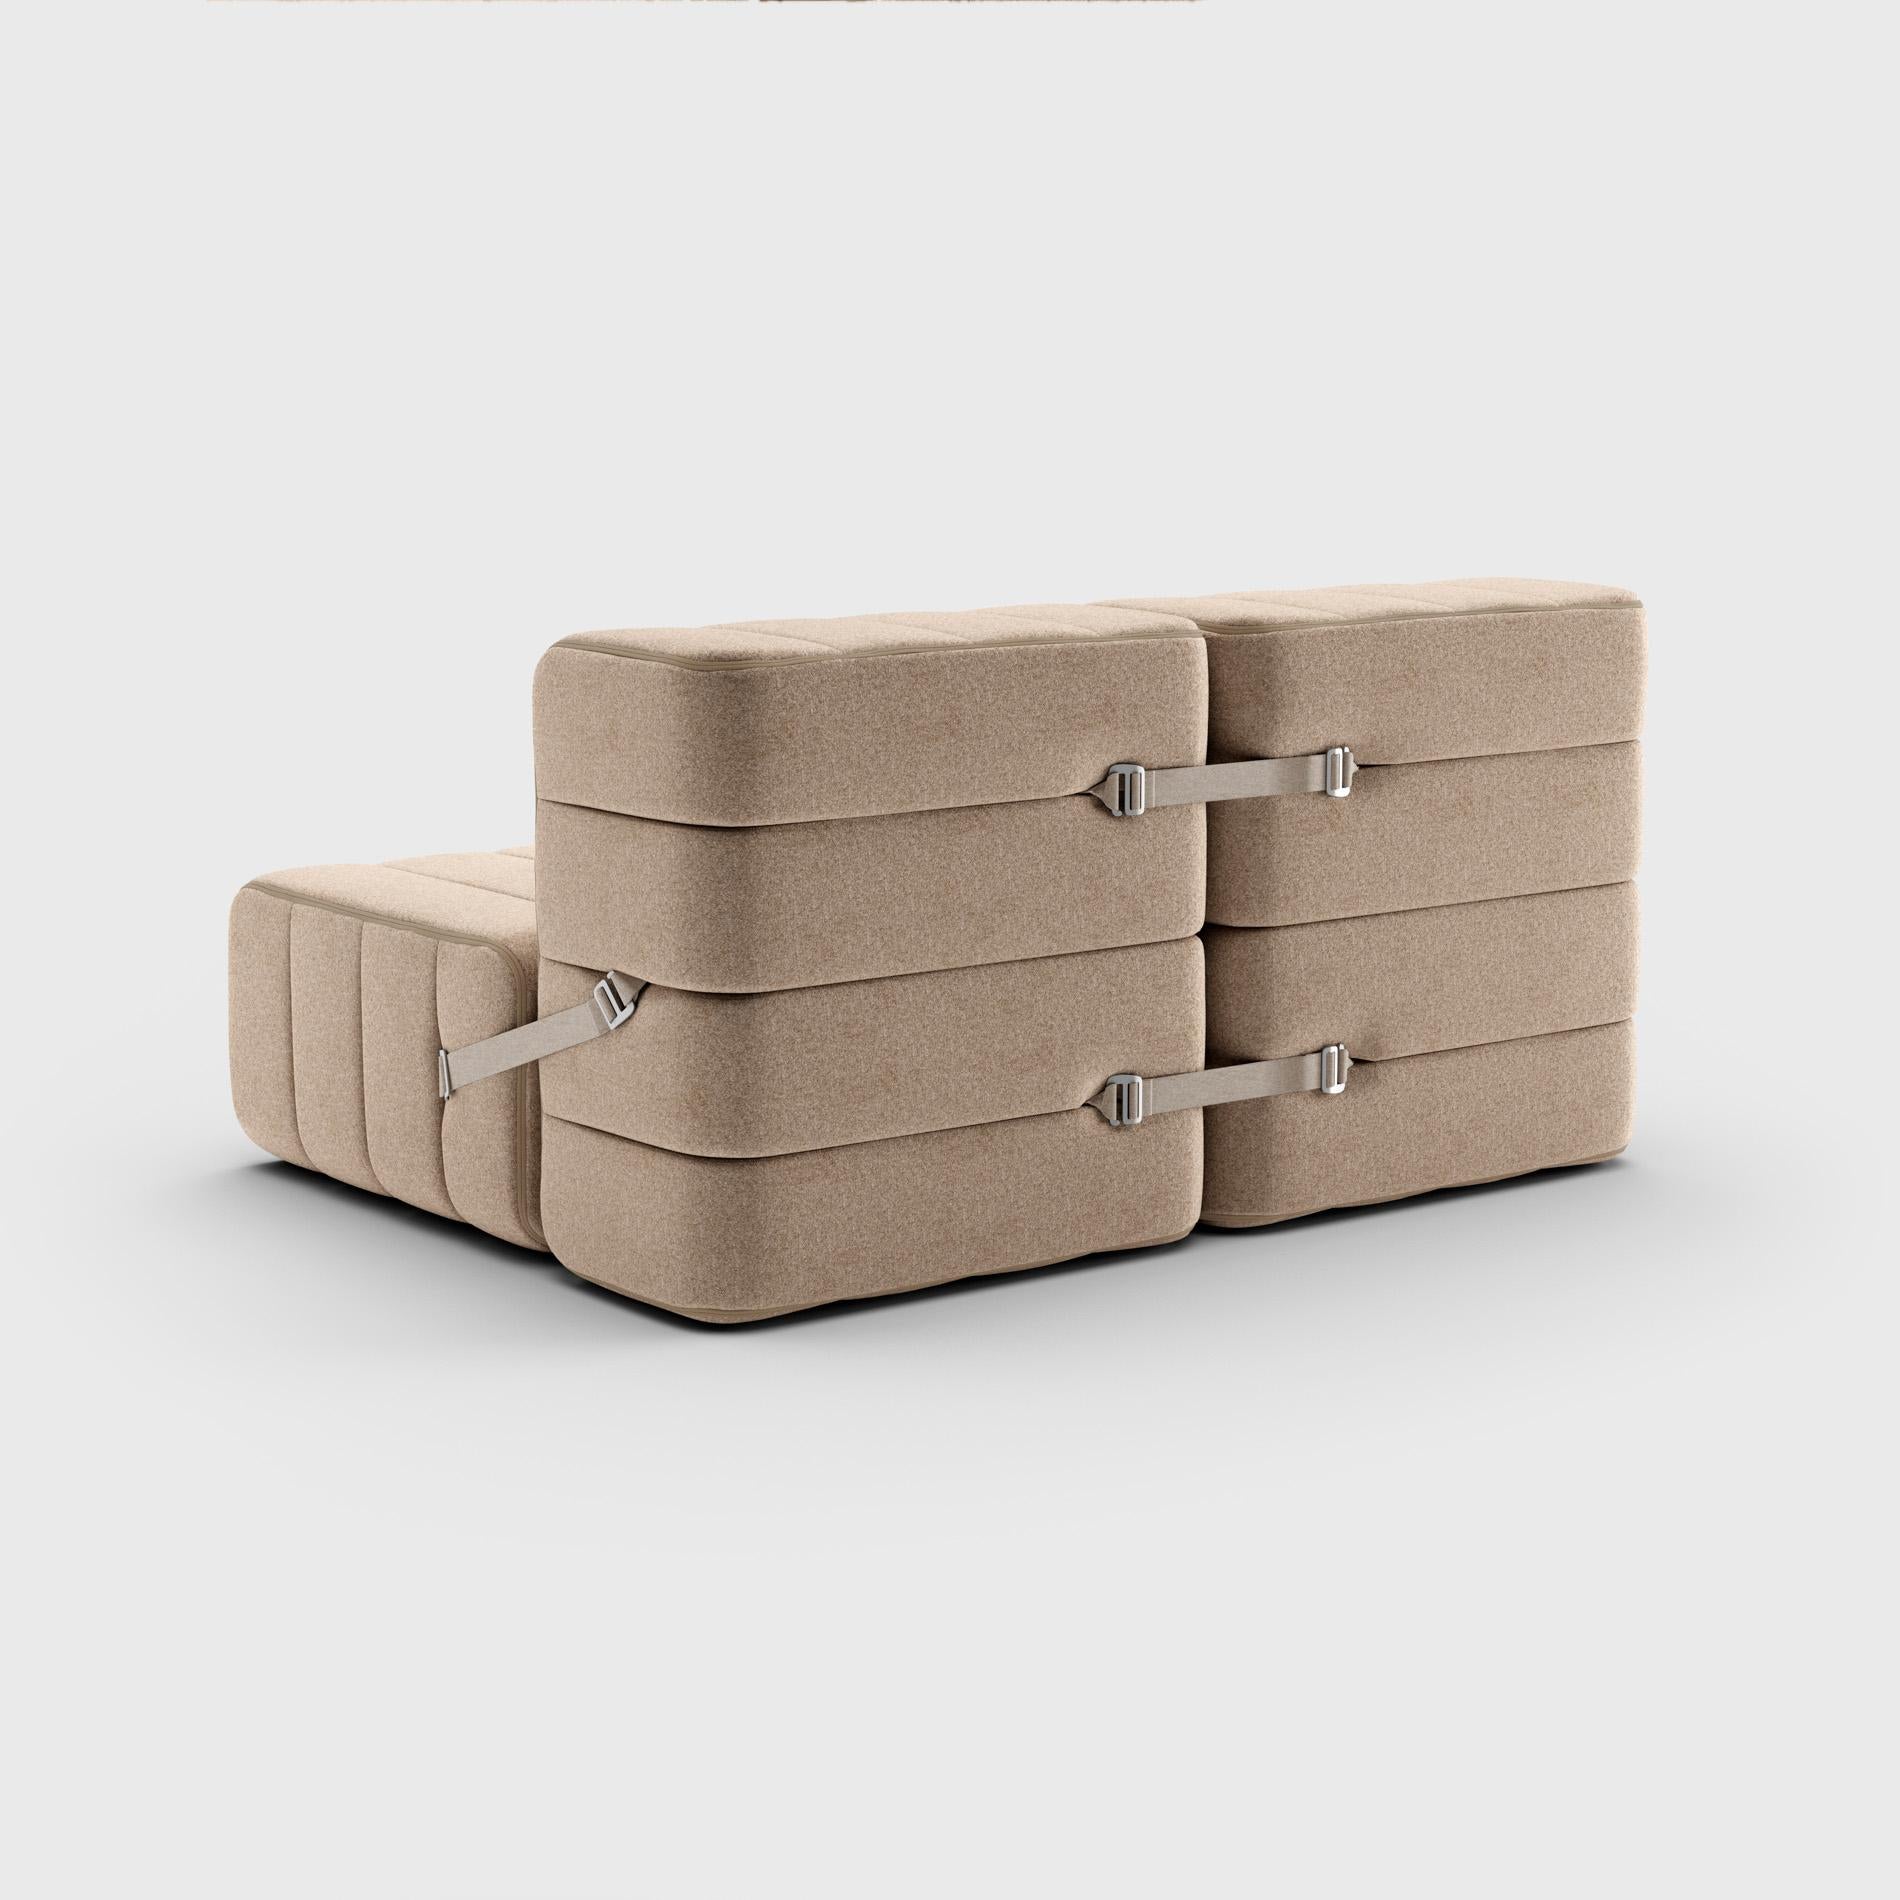 German Curt Single Module, Fabric Dama '0029 Beige / Grey', Curt Modular Sofa System For Sale